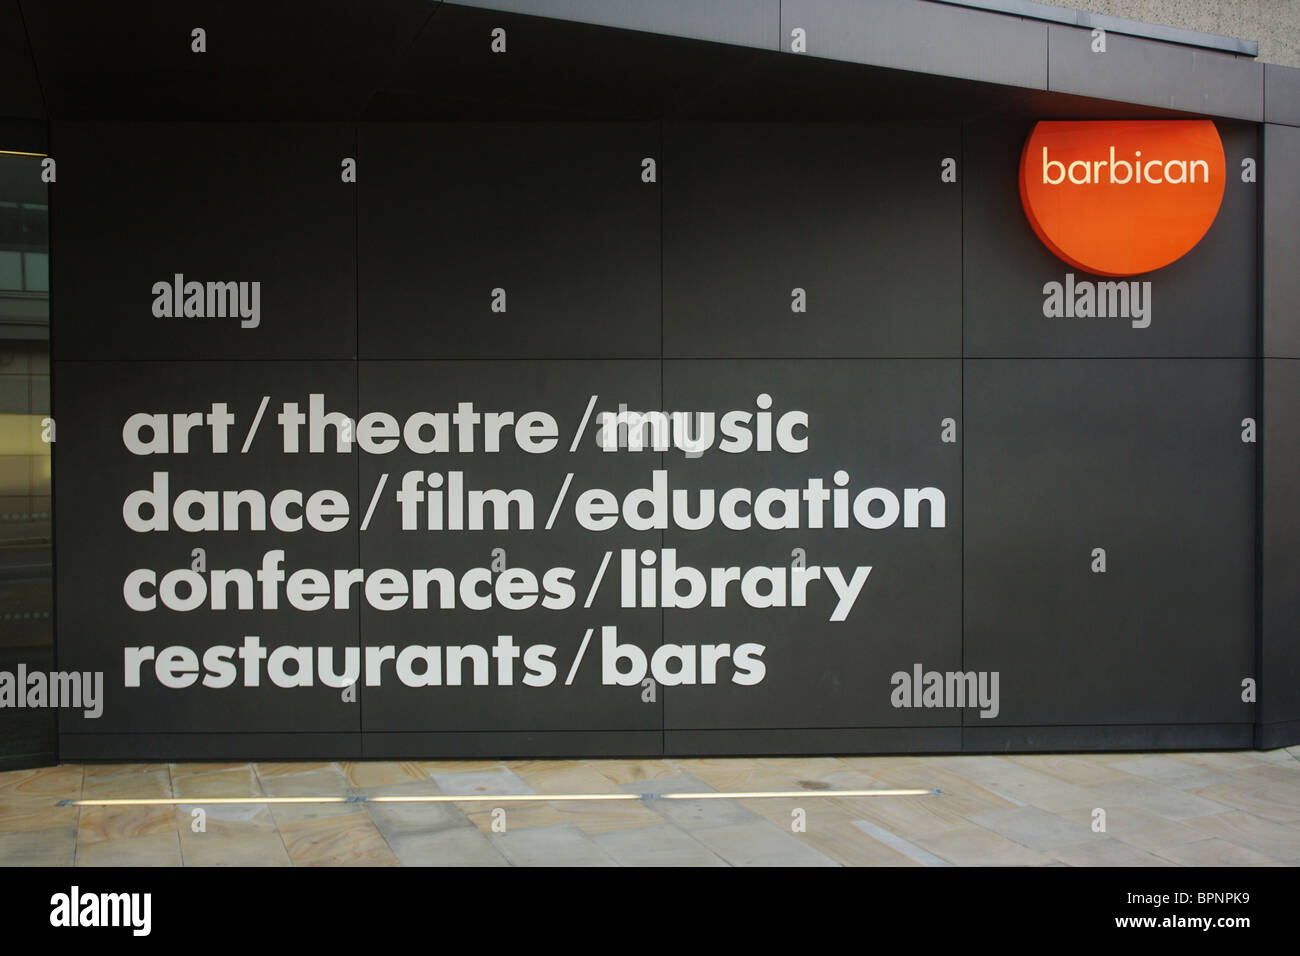 Barbican Arts Centre in London, England Stockfoto